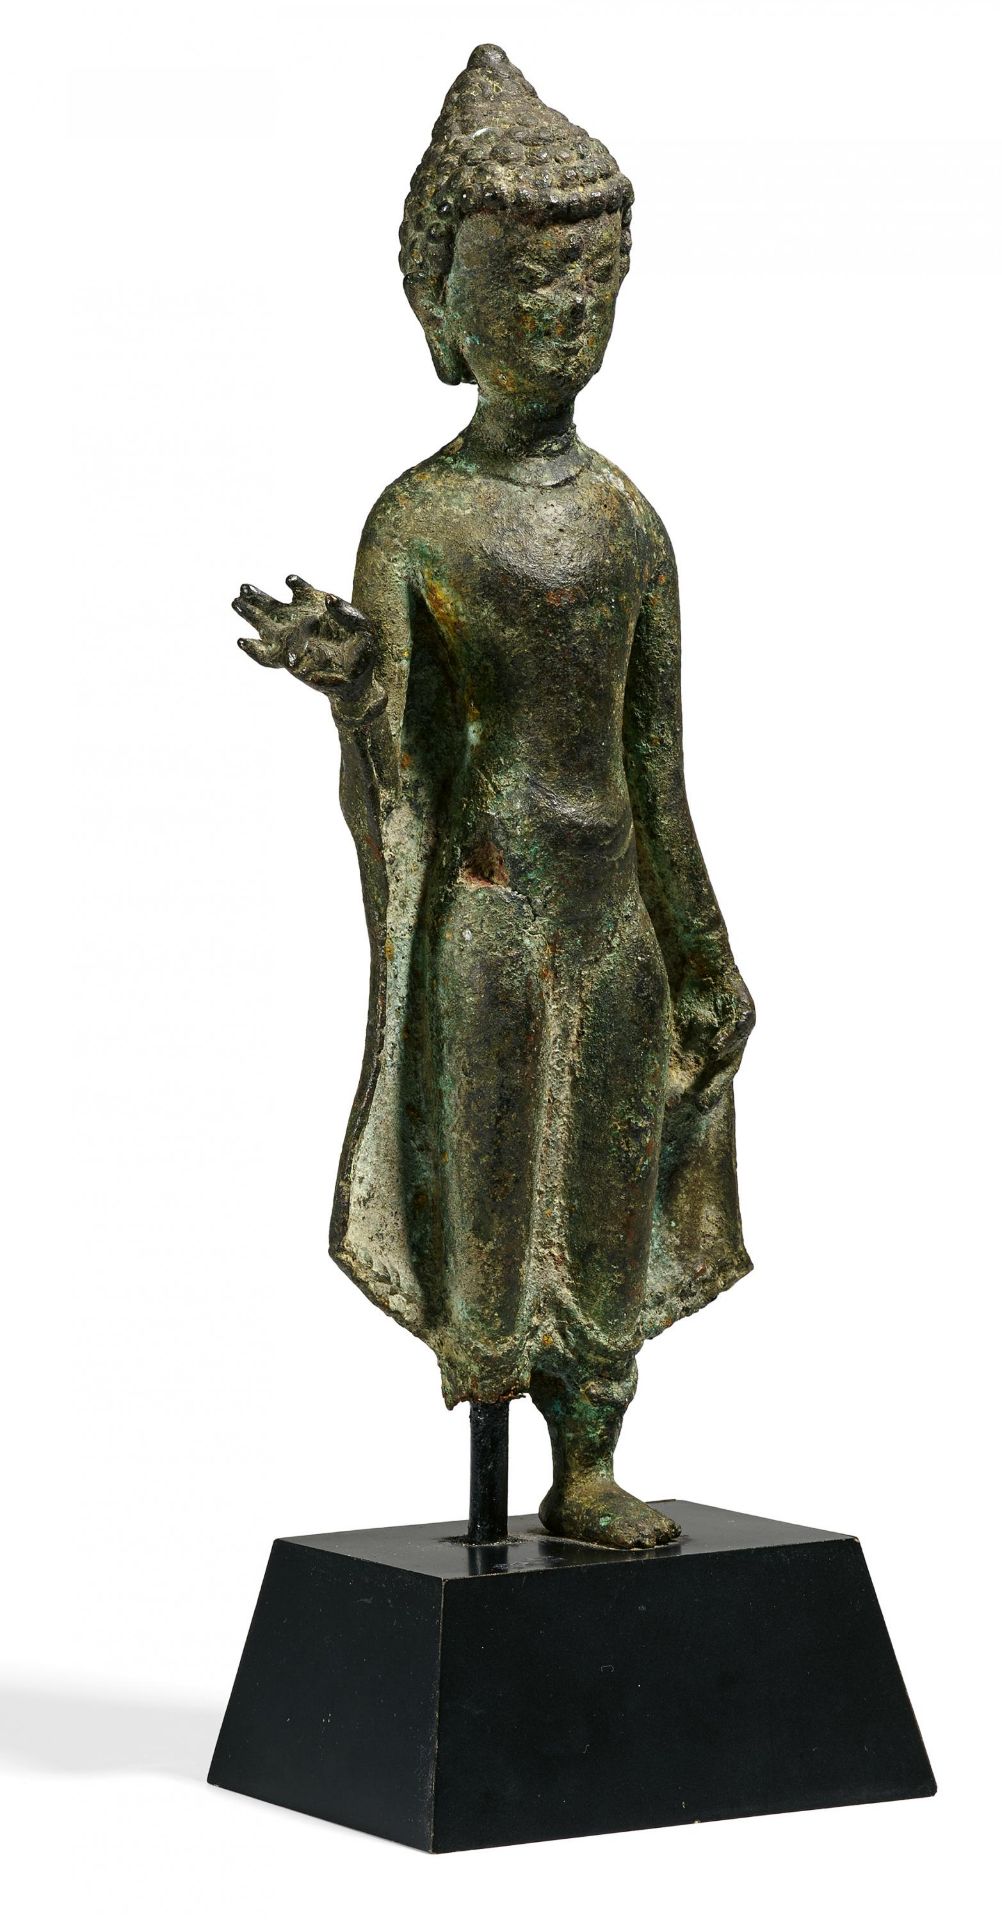 STANDING BUDDHA WITH OPEN CLOAK. Origin: Burma/Myanmar. Dynasty: Pagan period (839-1287). Date: